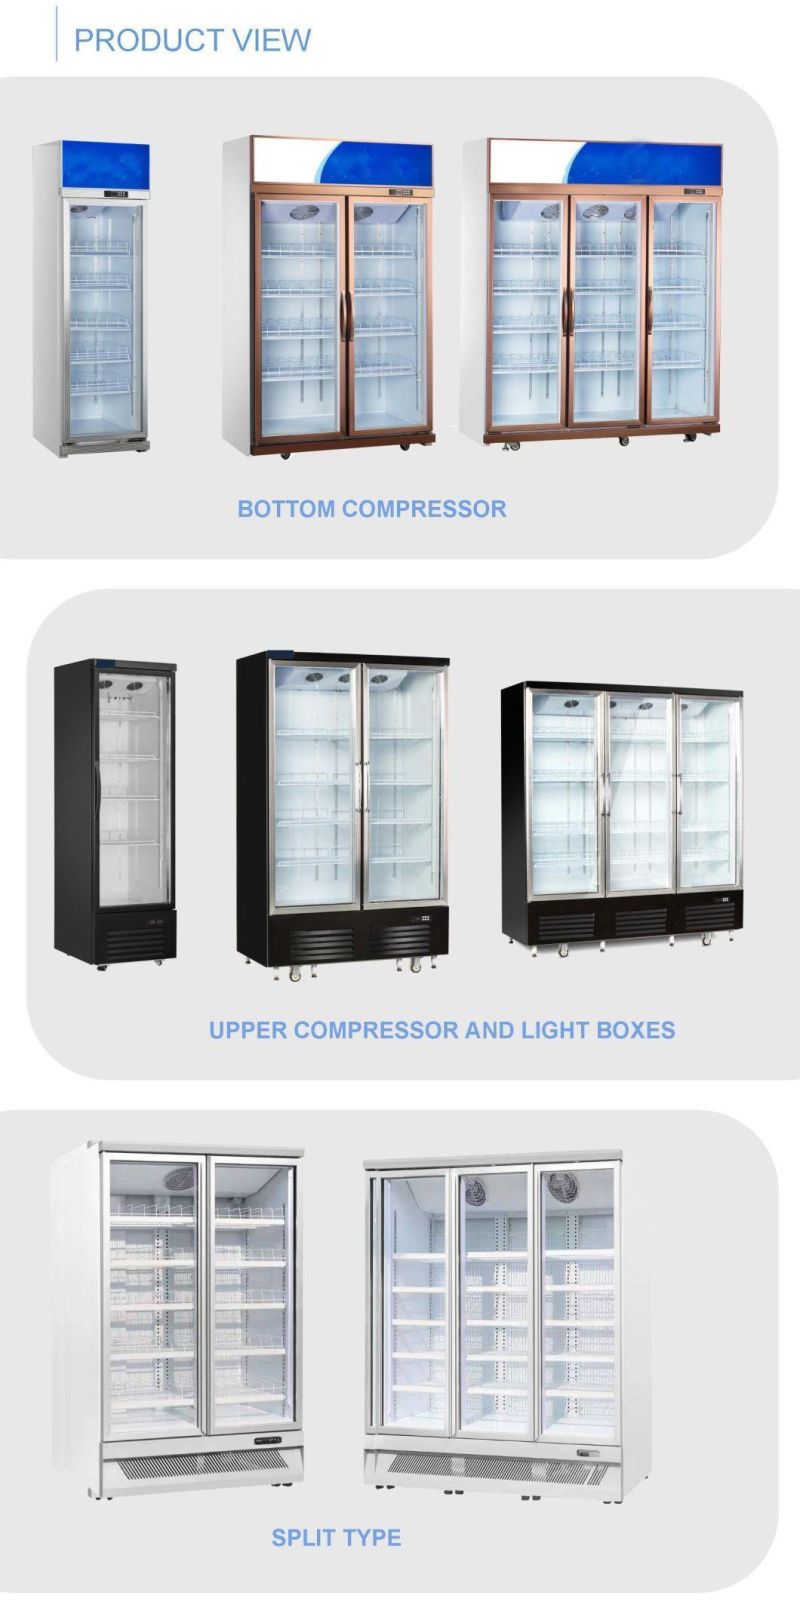 Commercial Upright Store Fridge Glass Door Beverage Refrigerator Showcase Drink Display Chille